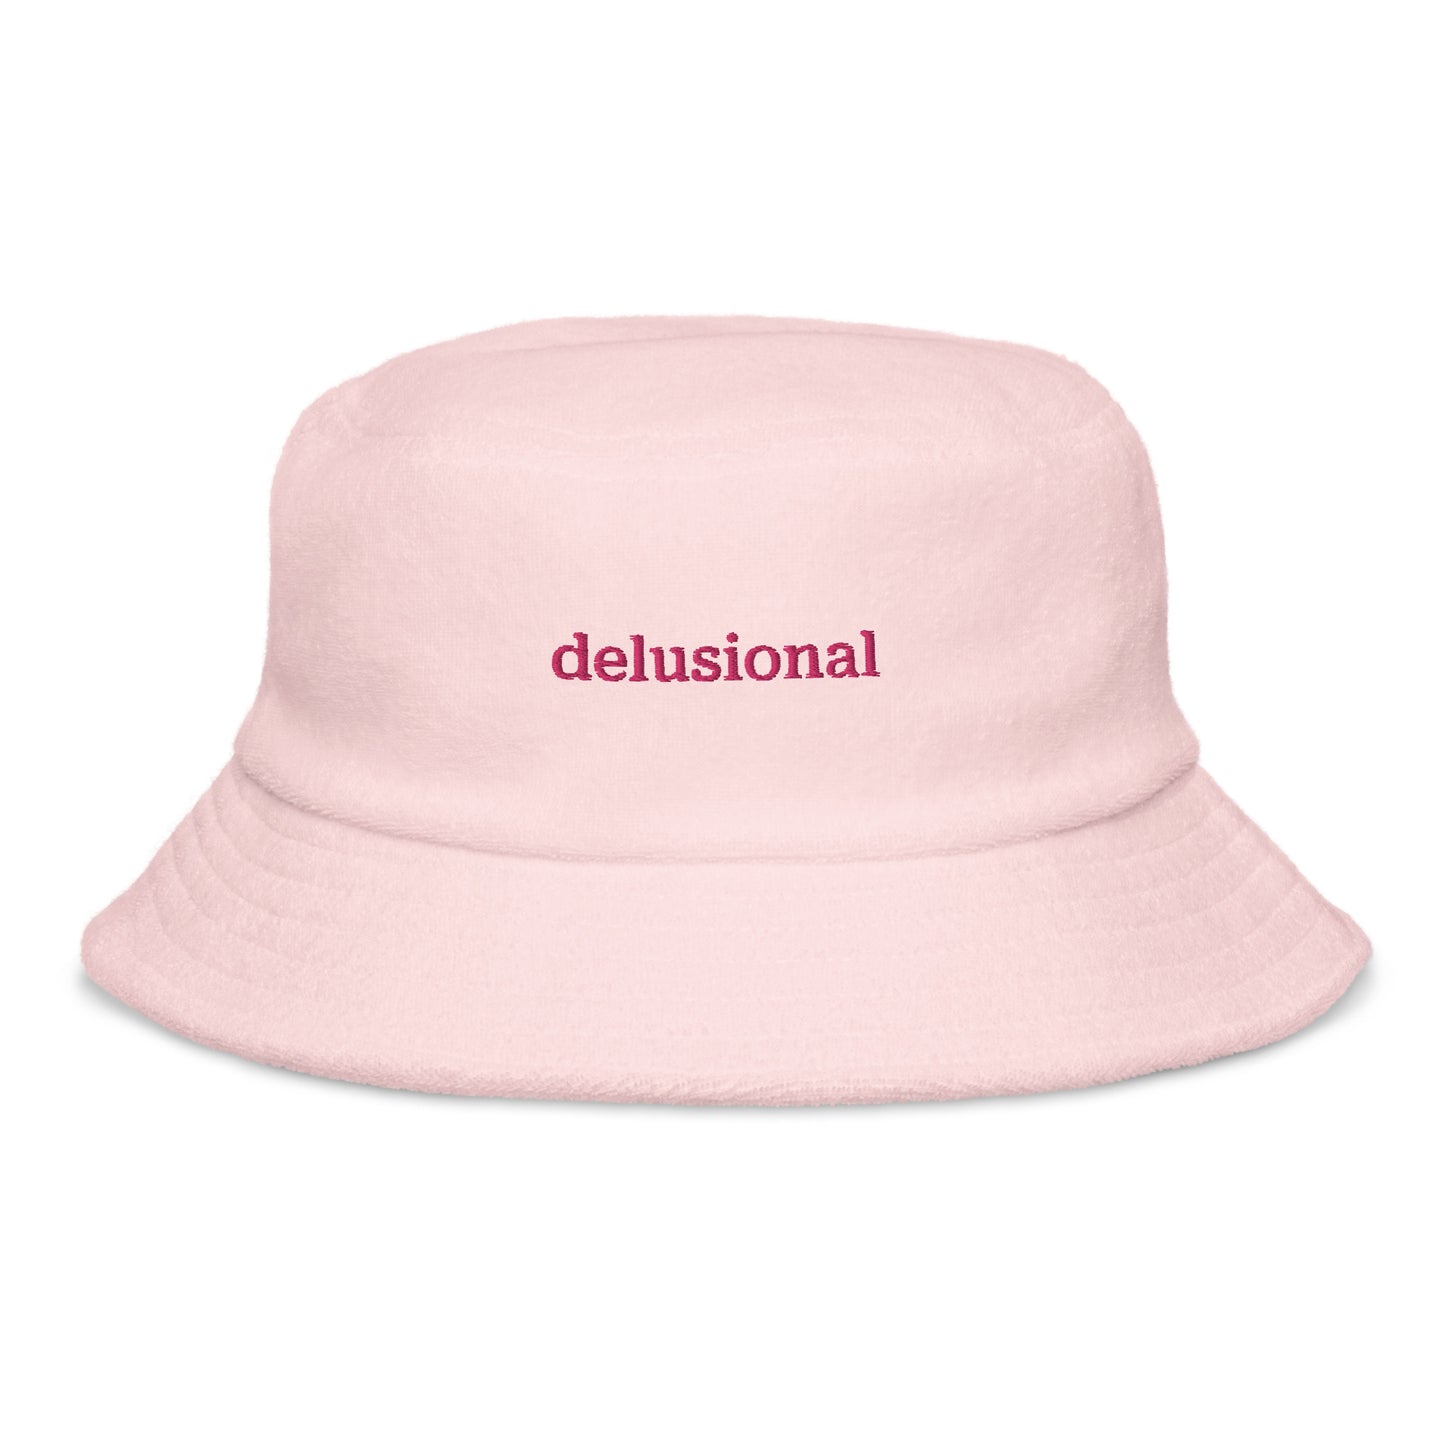 delusional bucket hat